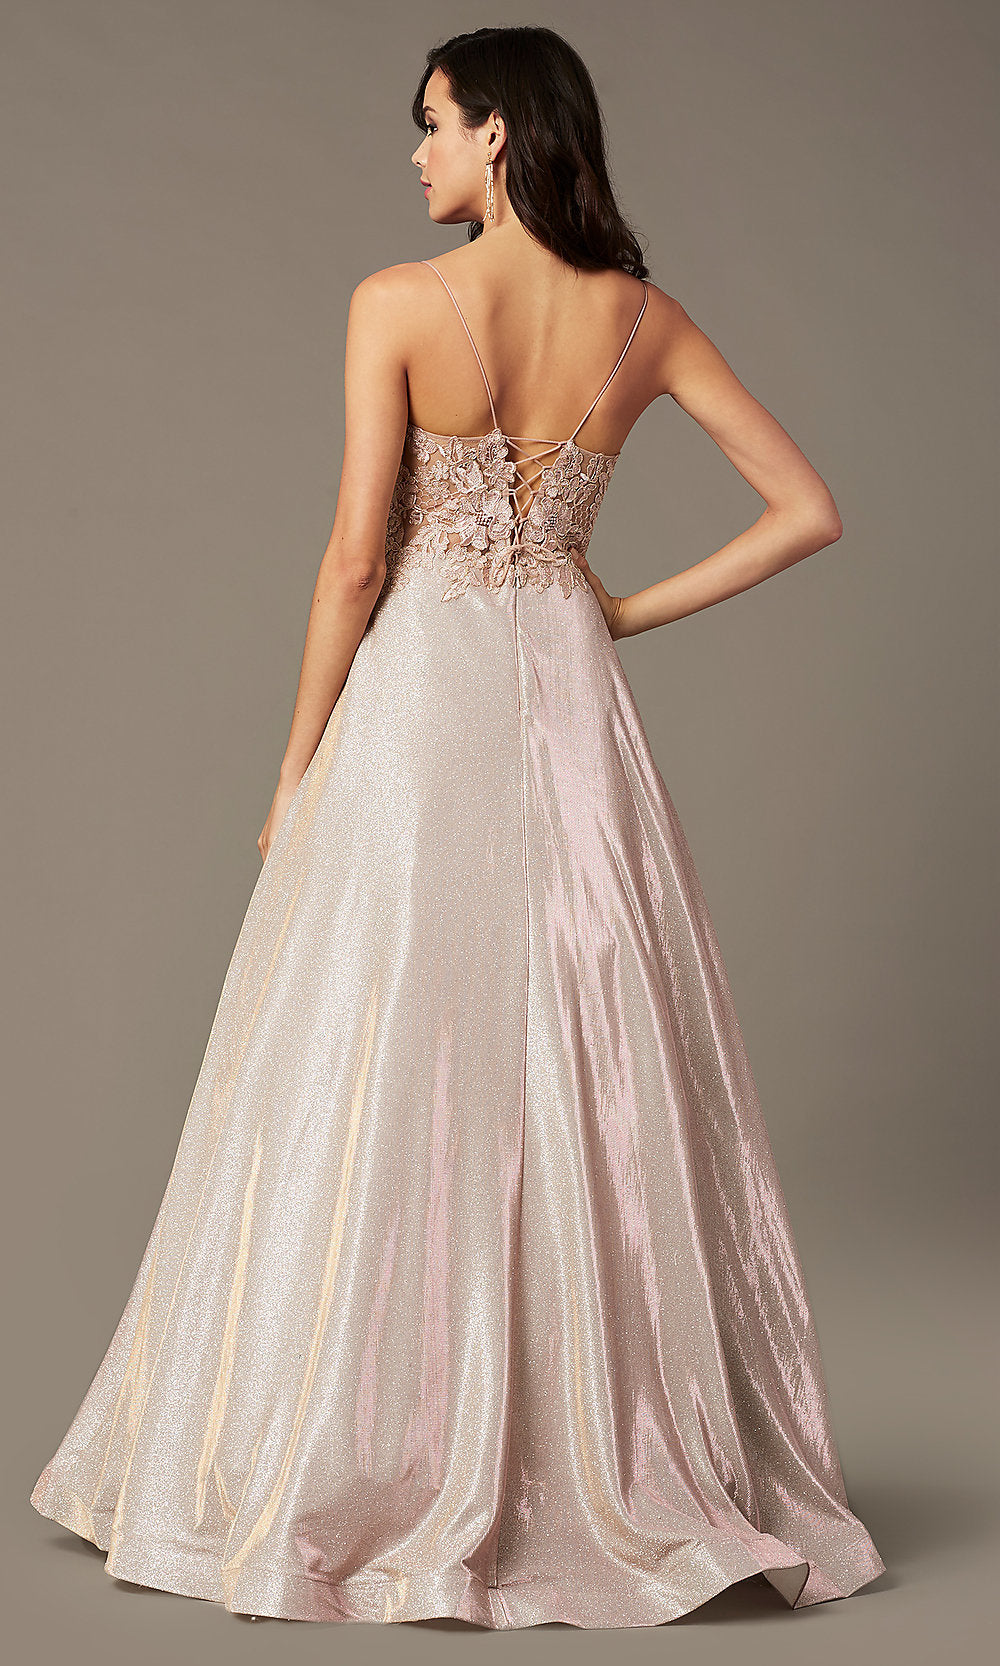 Glitter-Knit Open-Back Long Prom Dress - PromGirl